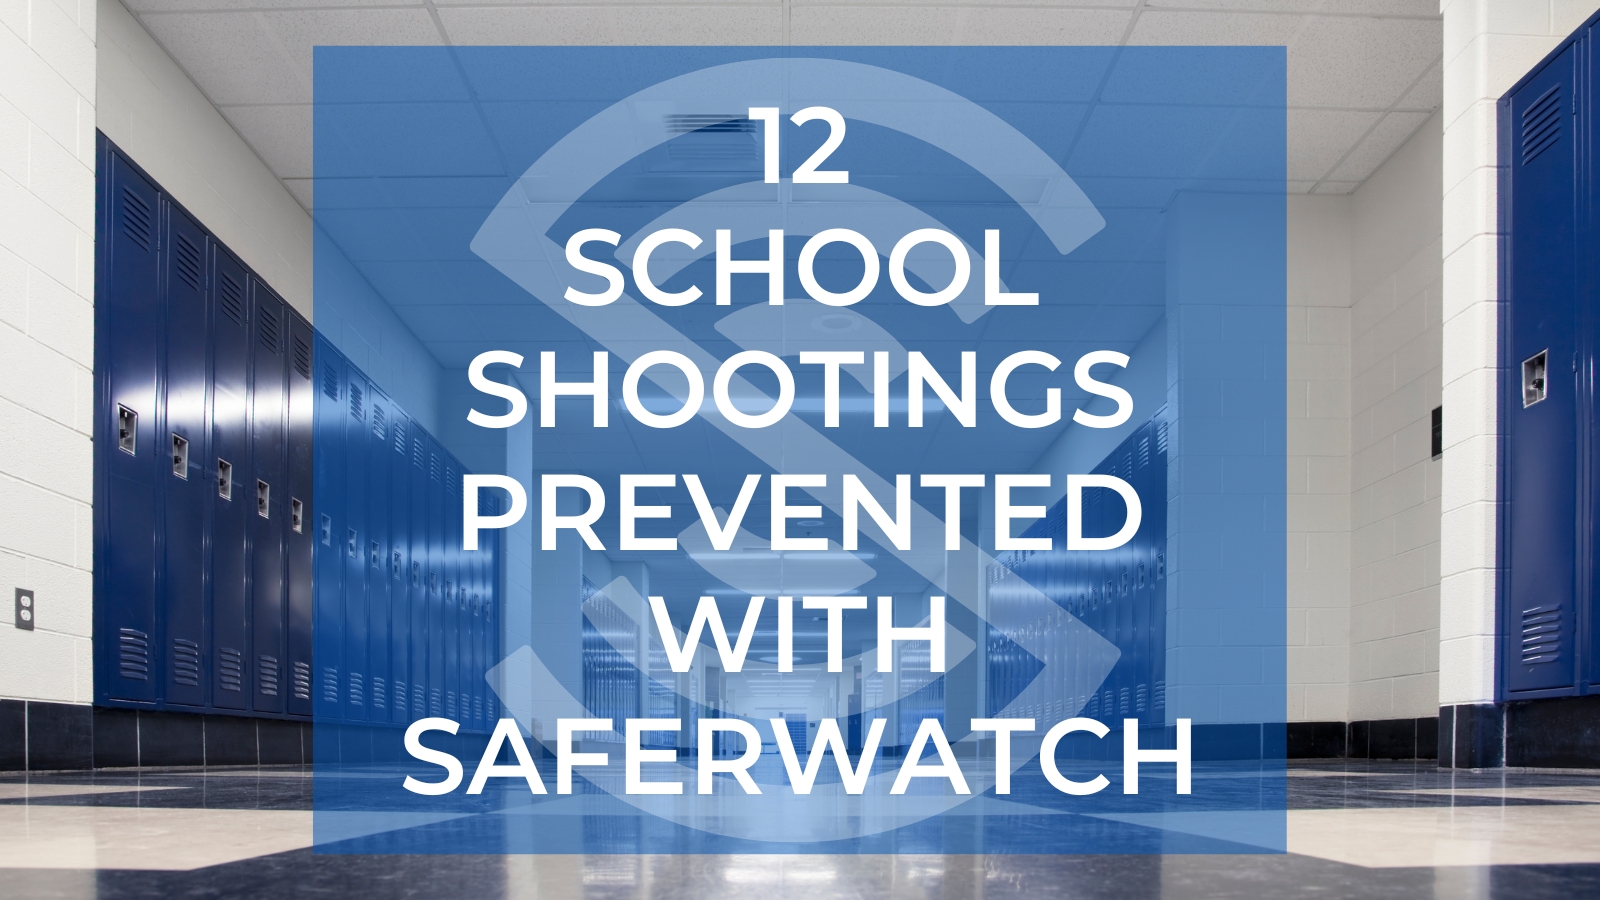 SaferWatch Prevents 12 School Shootings